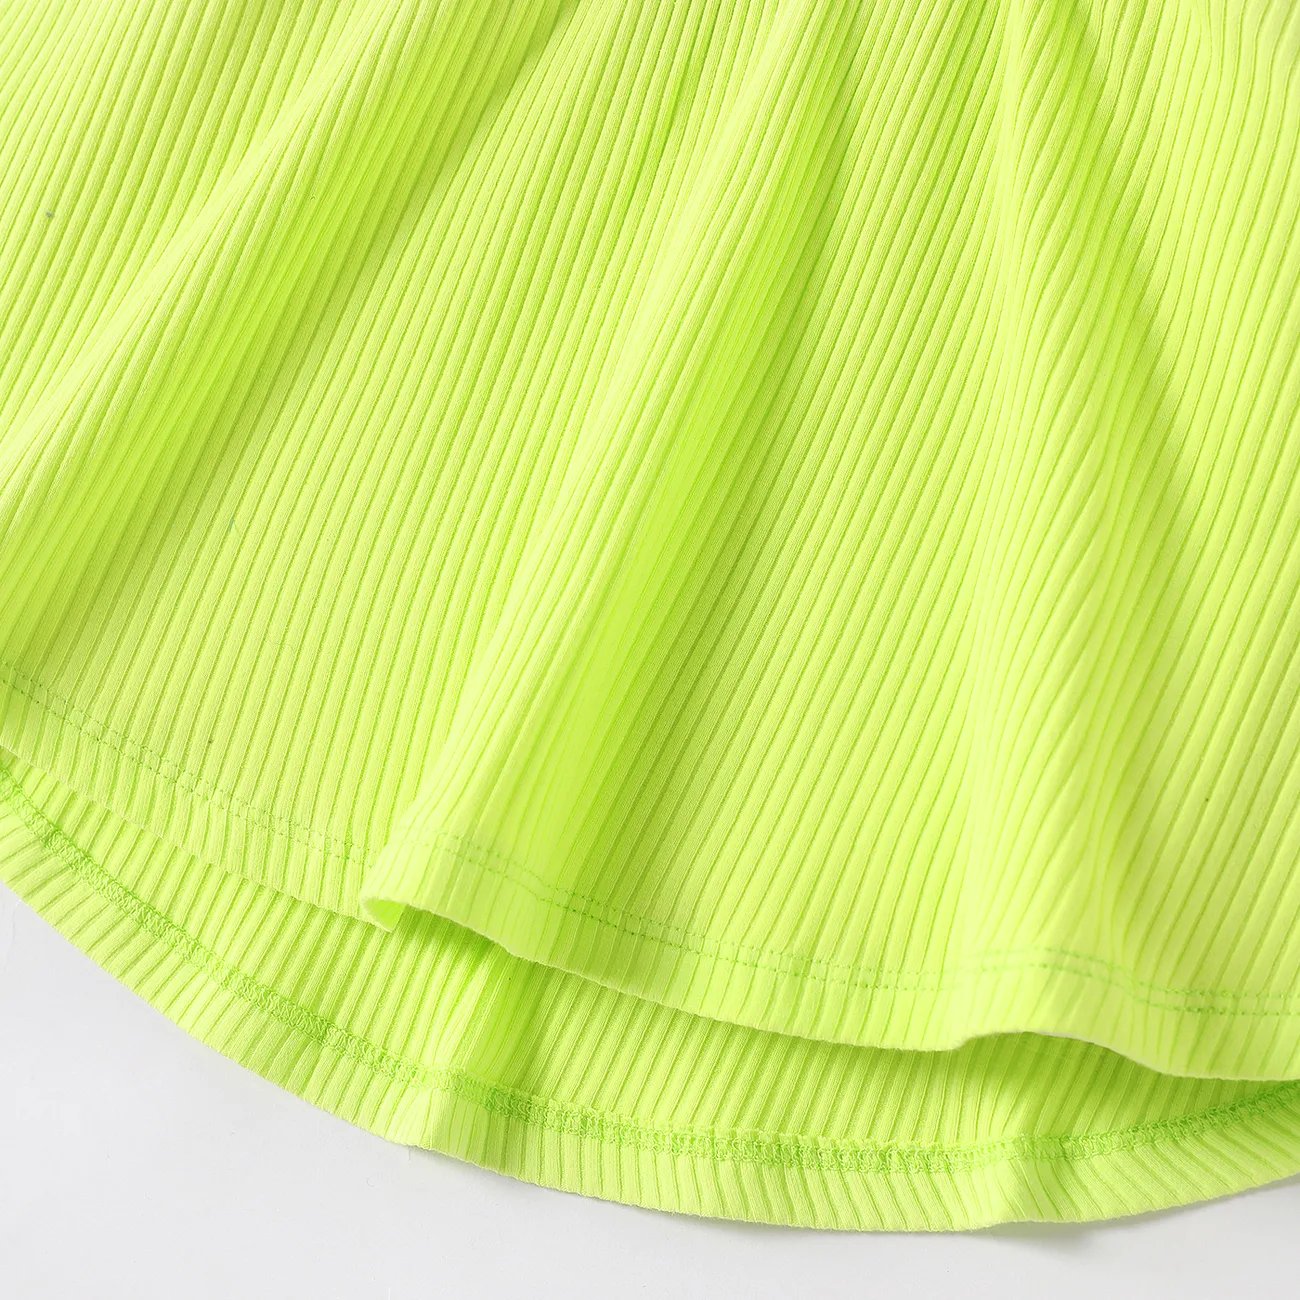 Baby Girl Solid Ribbed Slip Dress Light Green big image 1